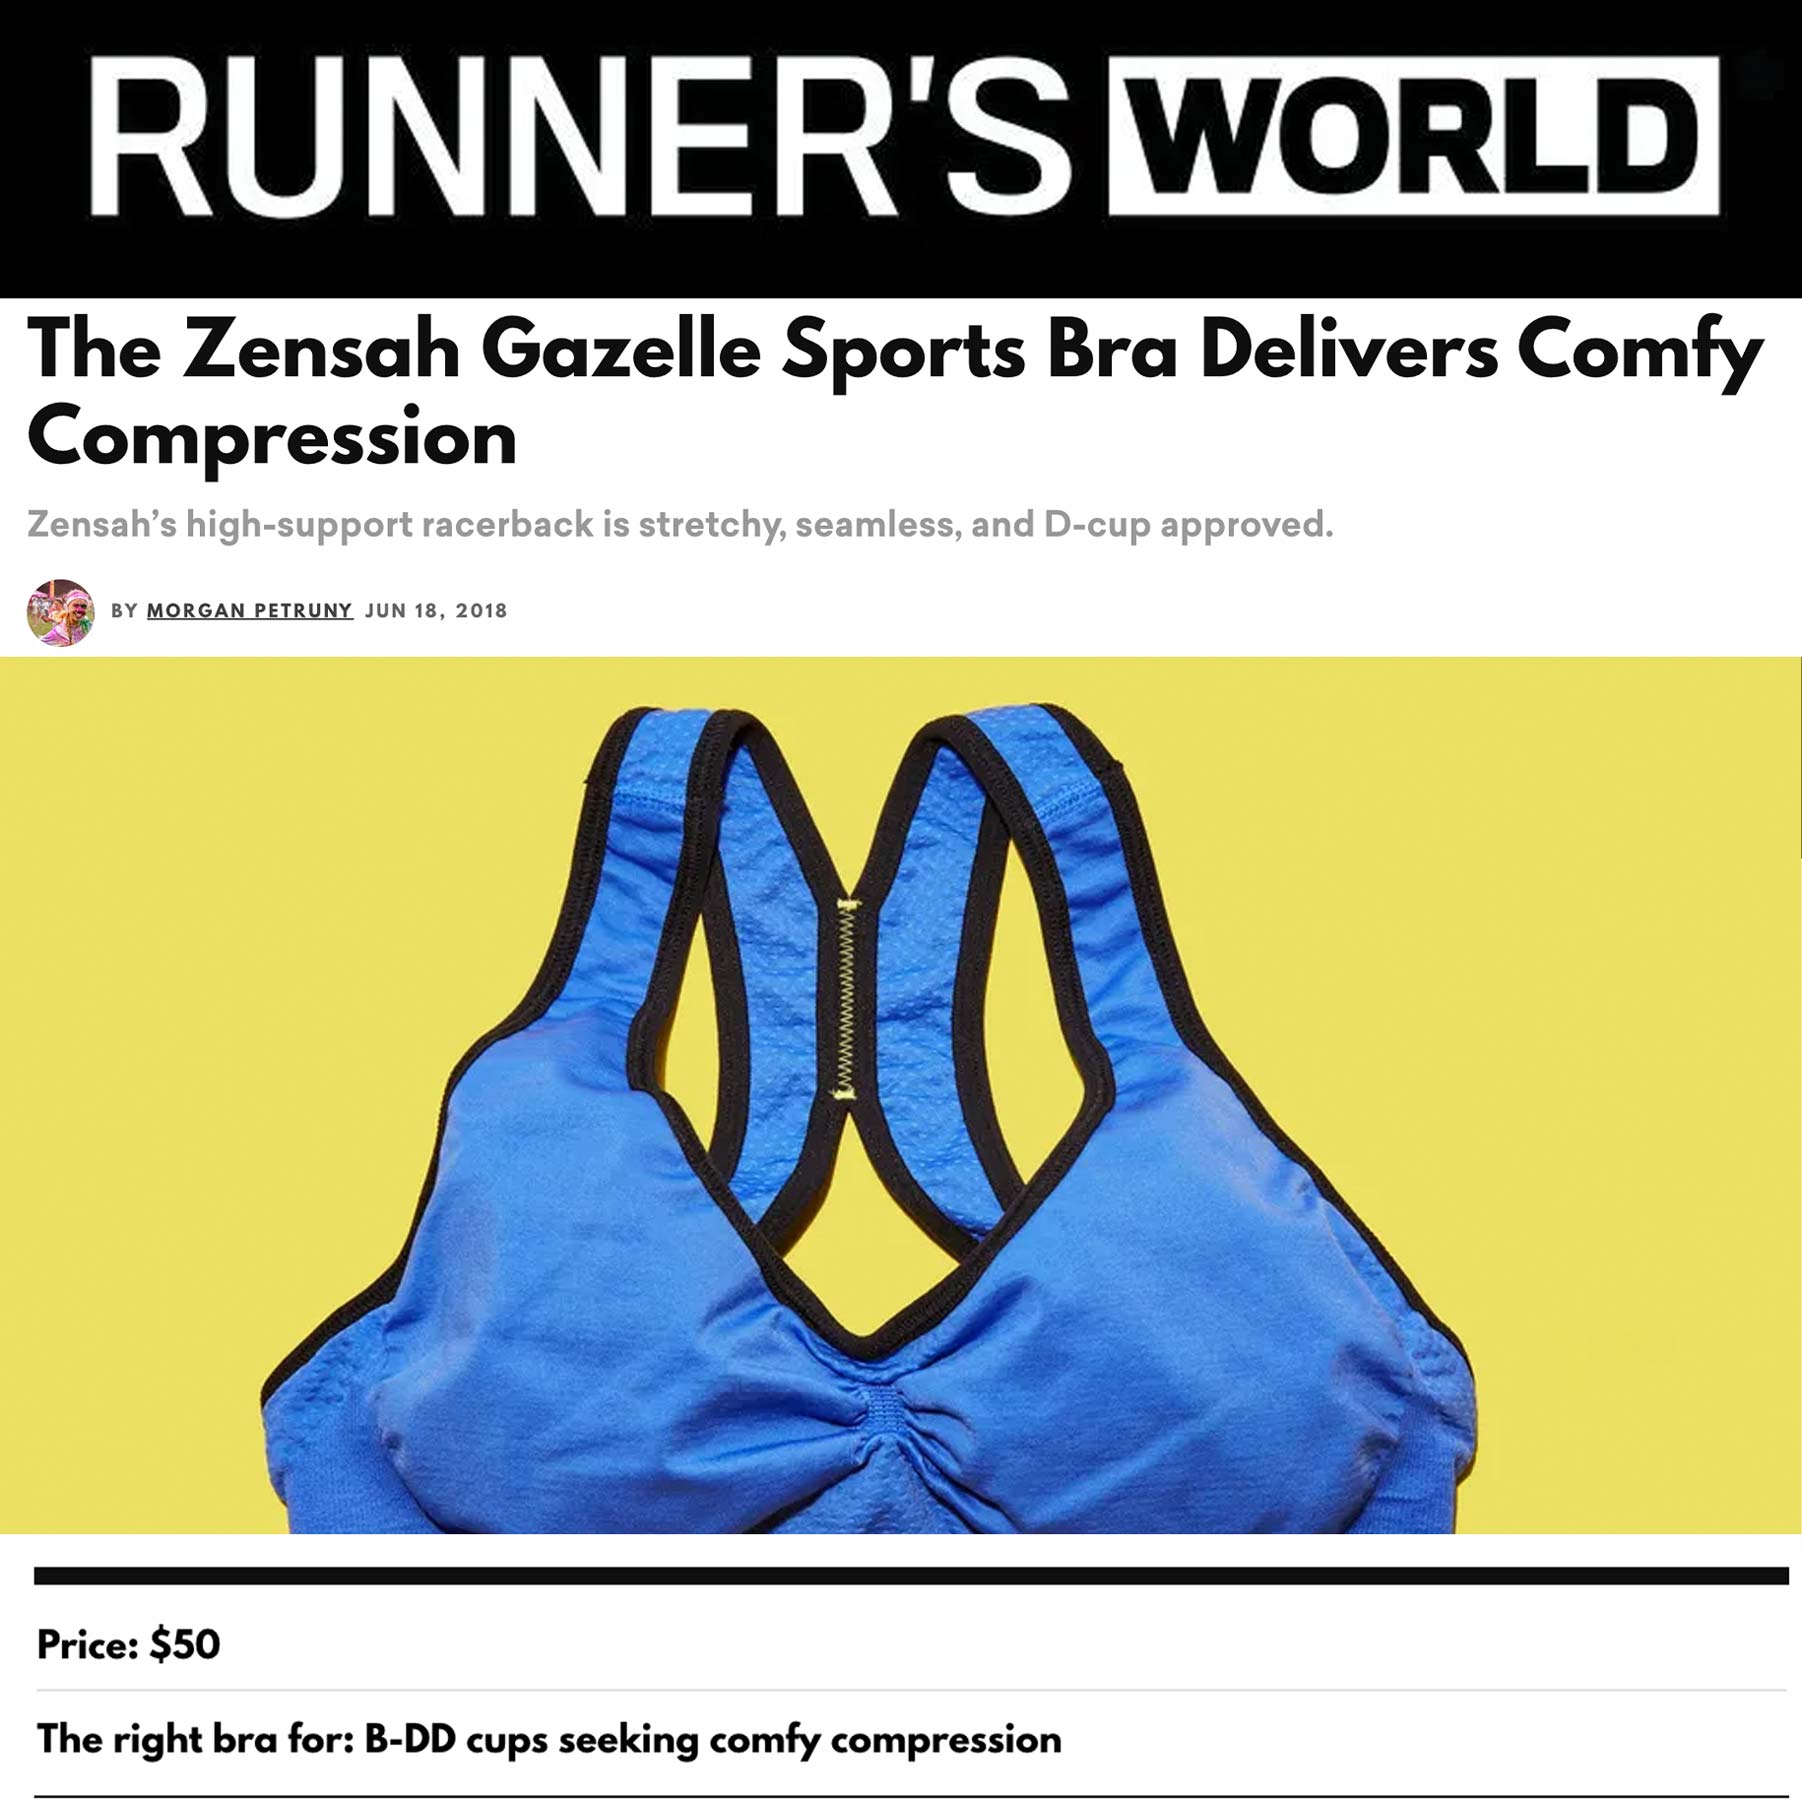 Runner's World: The Zensah Gazelle Sports Bra Delivers Comfy Compression